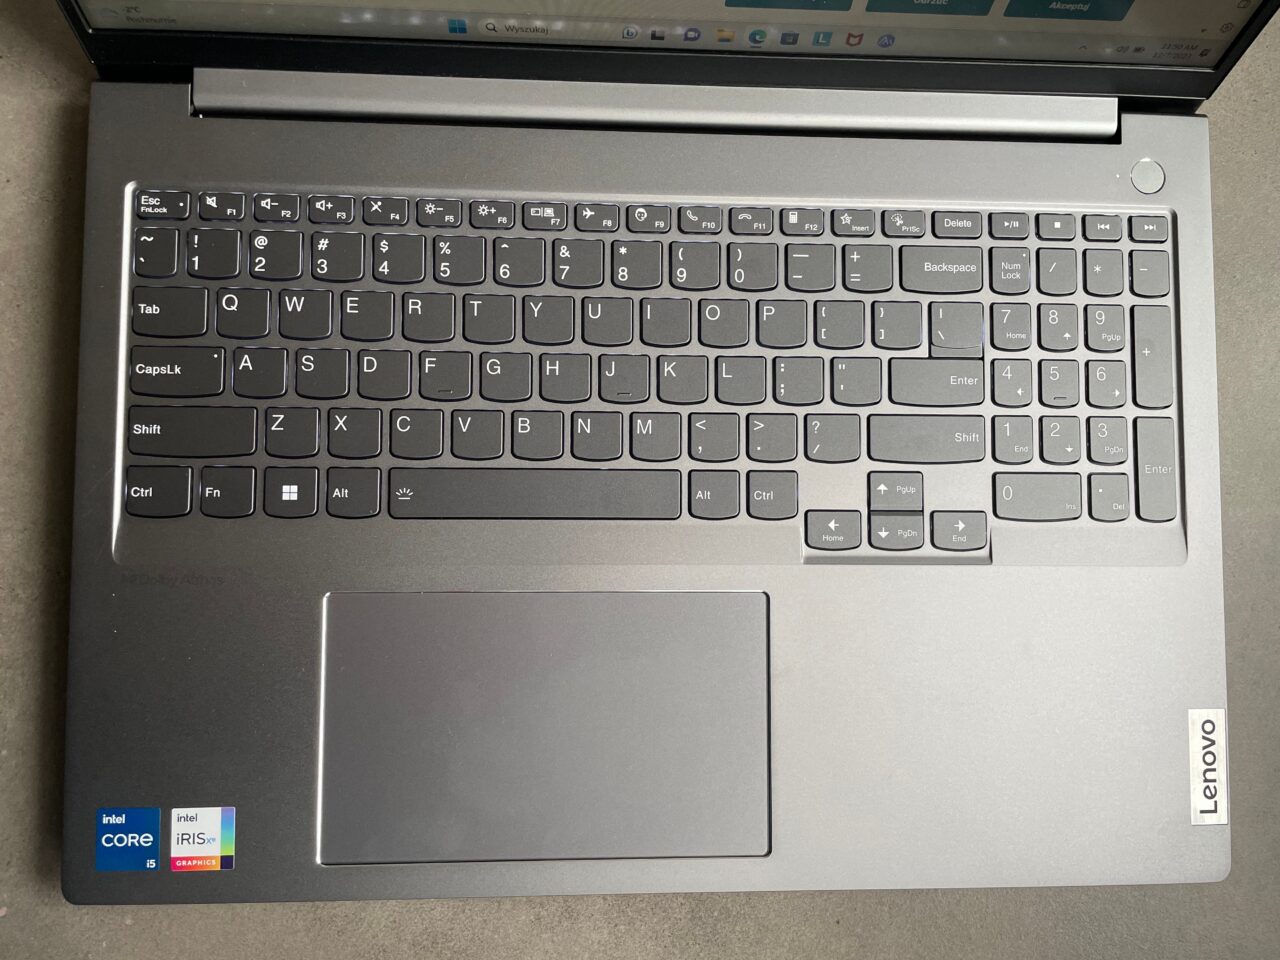 Klawiatura laptopa Lenovo z naklejkami procesora Intel Core i5 i grafiki Intel Iris.